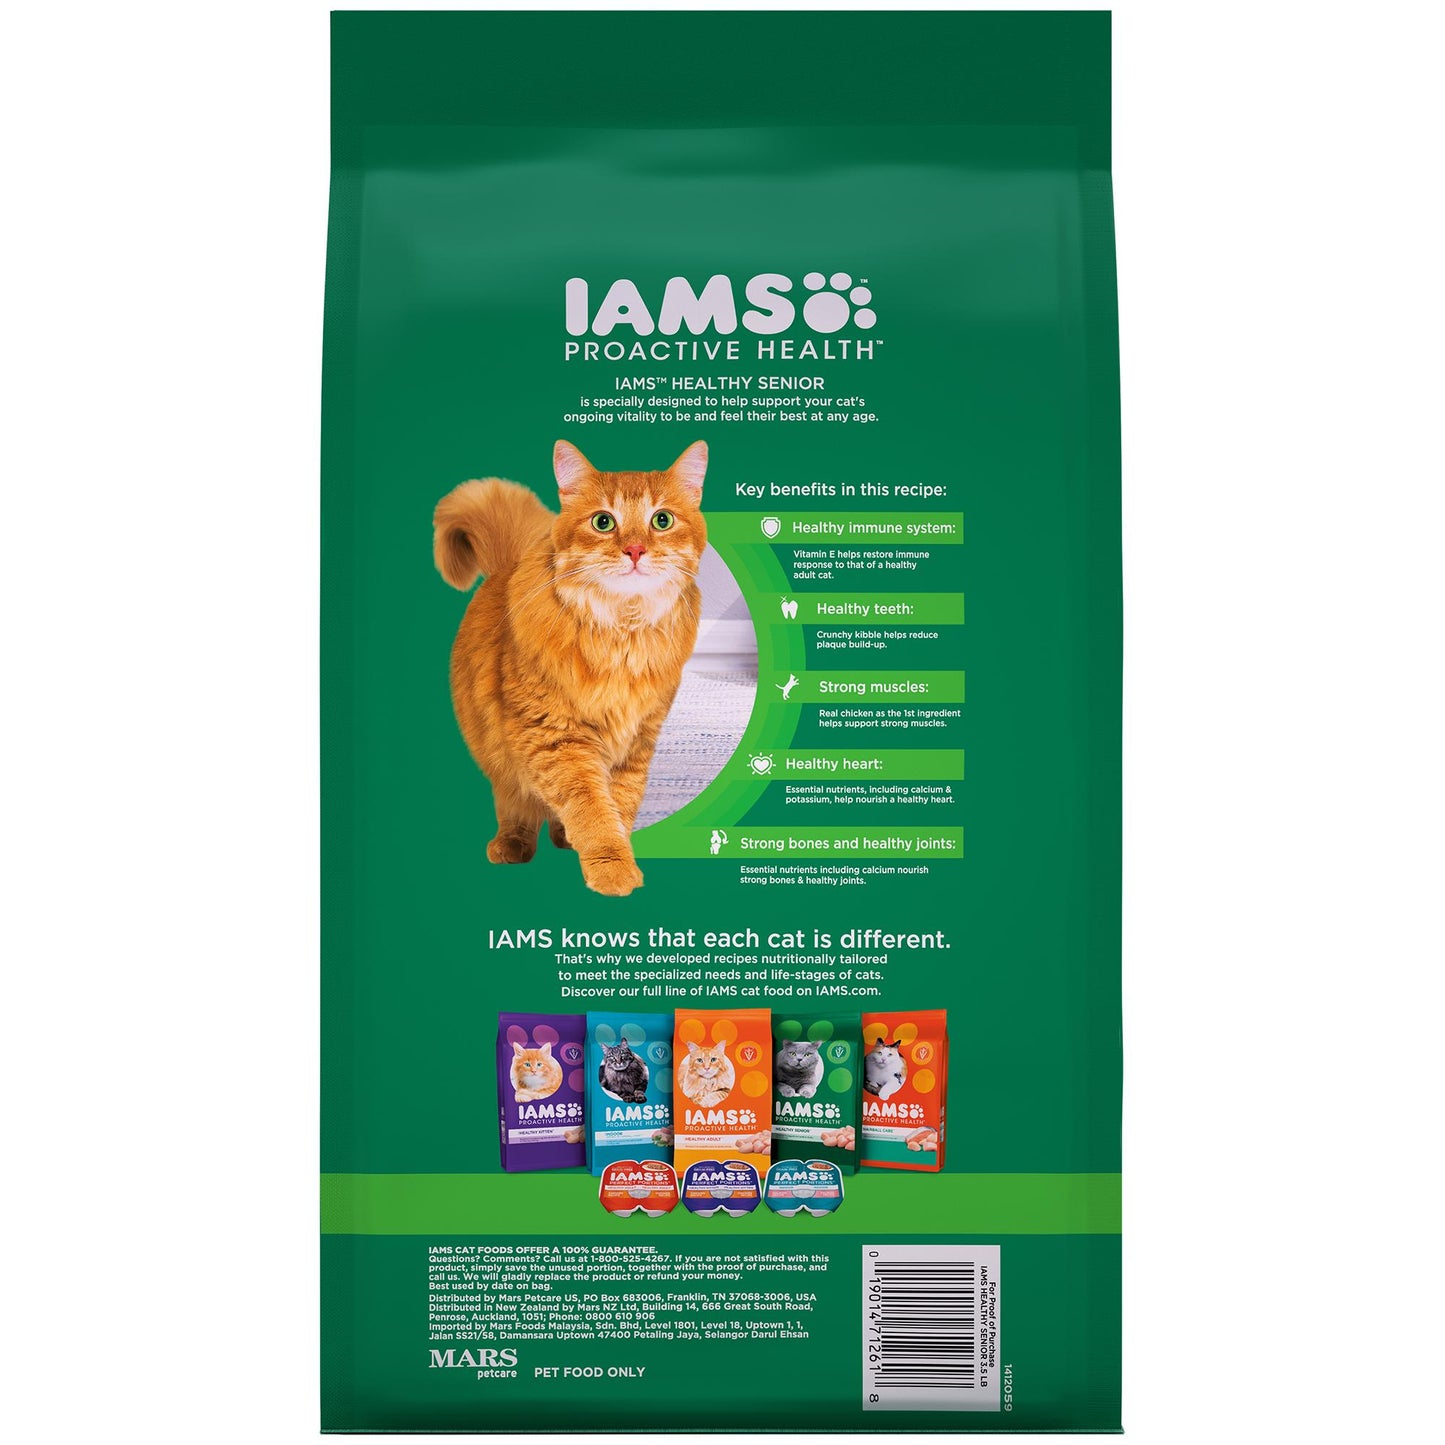 Iams Proactive Health Chicken Senior Dry Cat Food